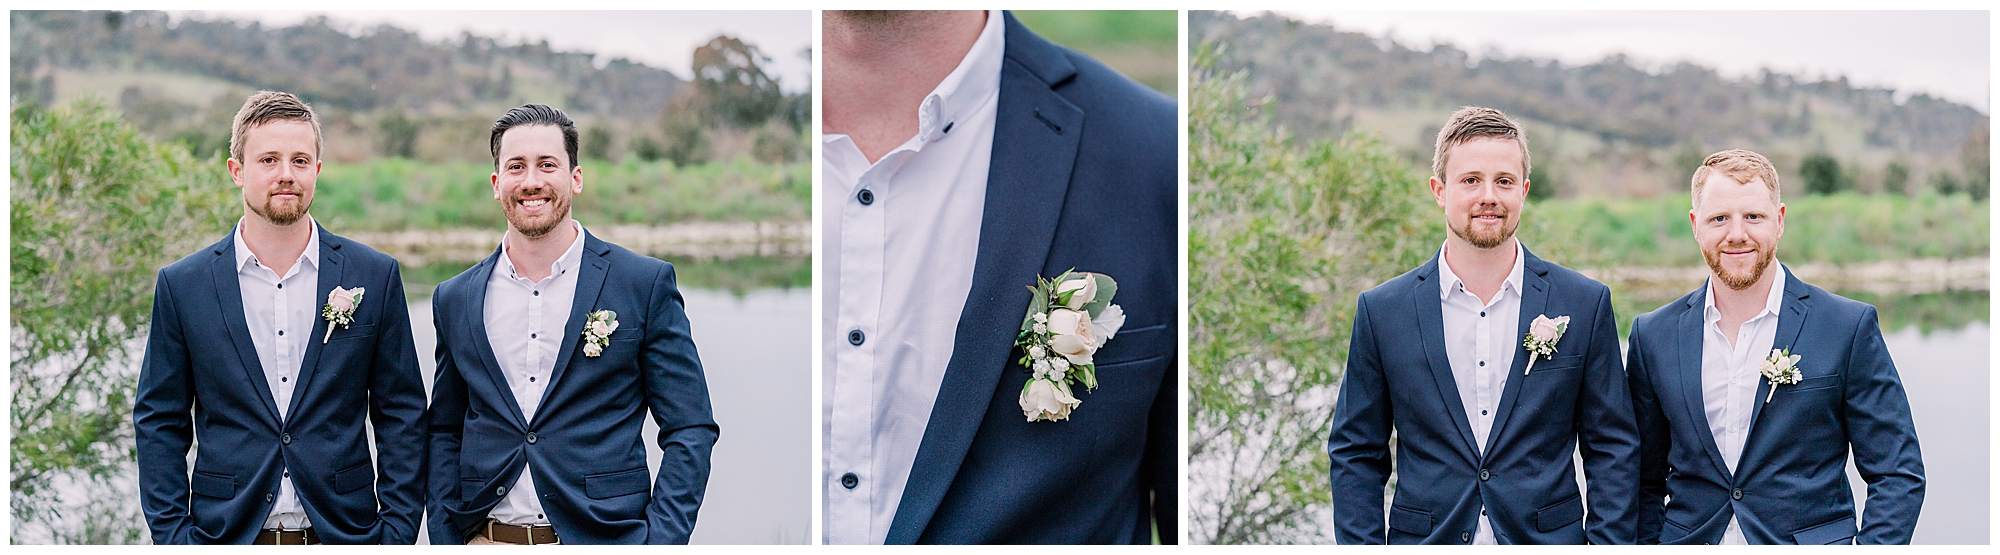 Blue groomsmen suits for a wedding | Wedding photographer Australian 